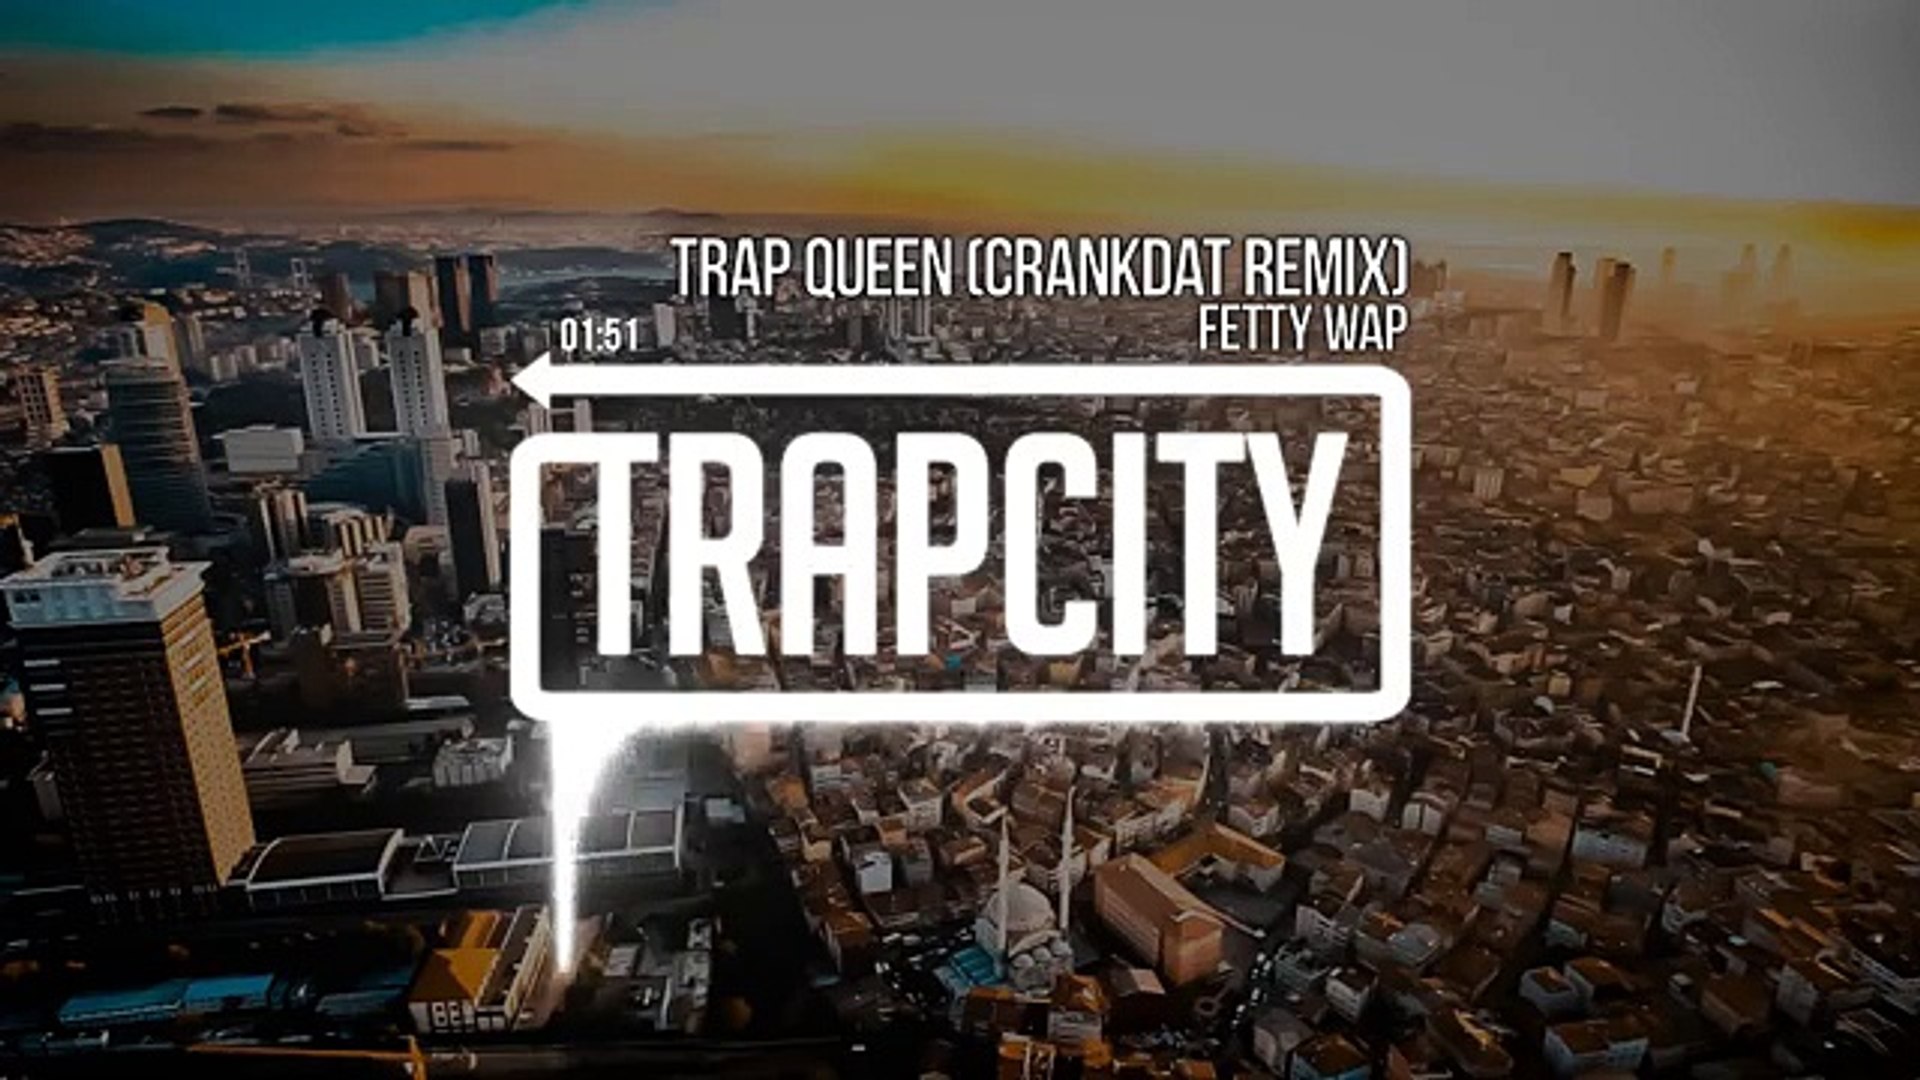 Fetty Wap - Trap Queen Crankdat Remix - Dailymotion Video